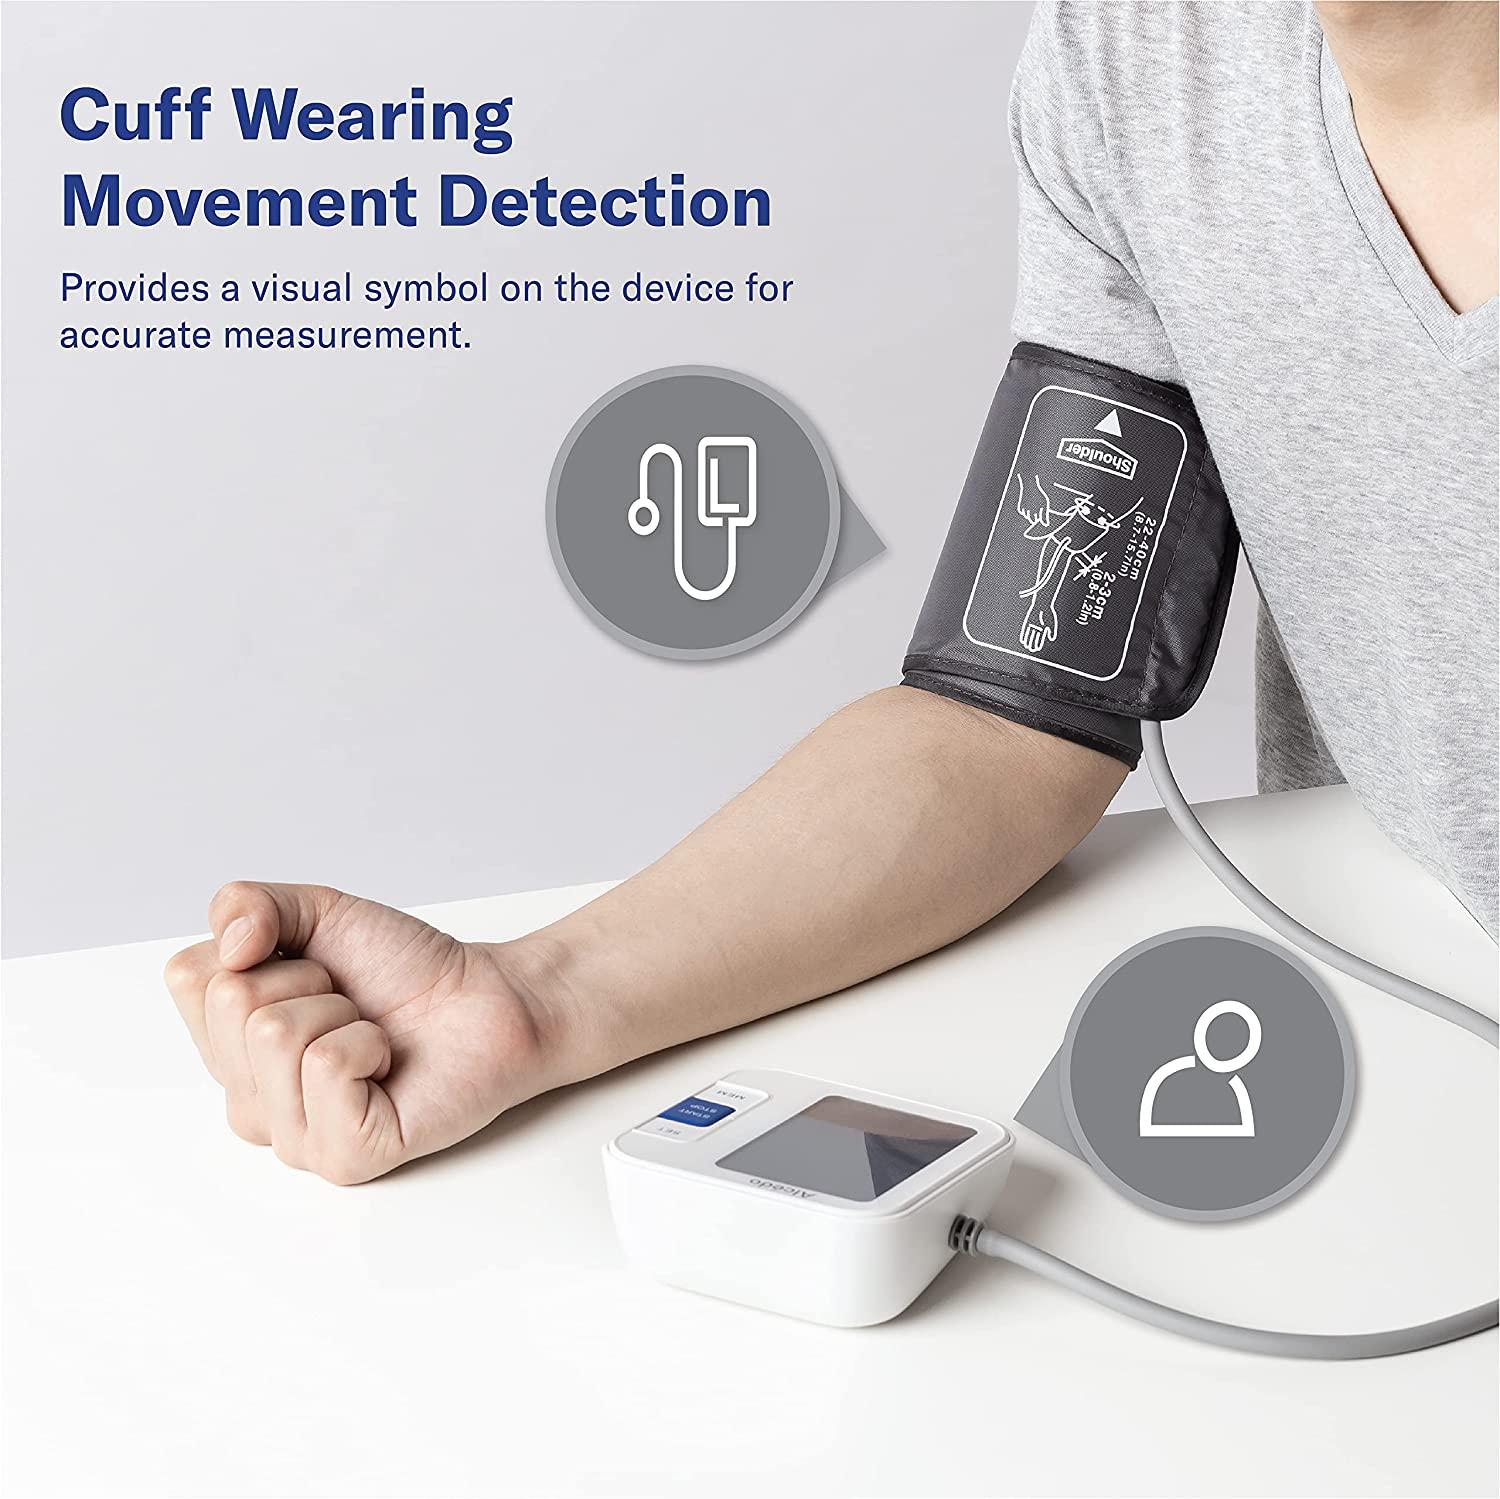  Alcedo Blood Pressure Monitor For Home Use, Automatic  Digital BP Machine